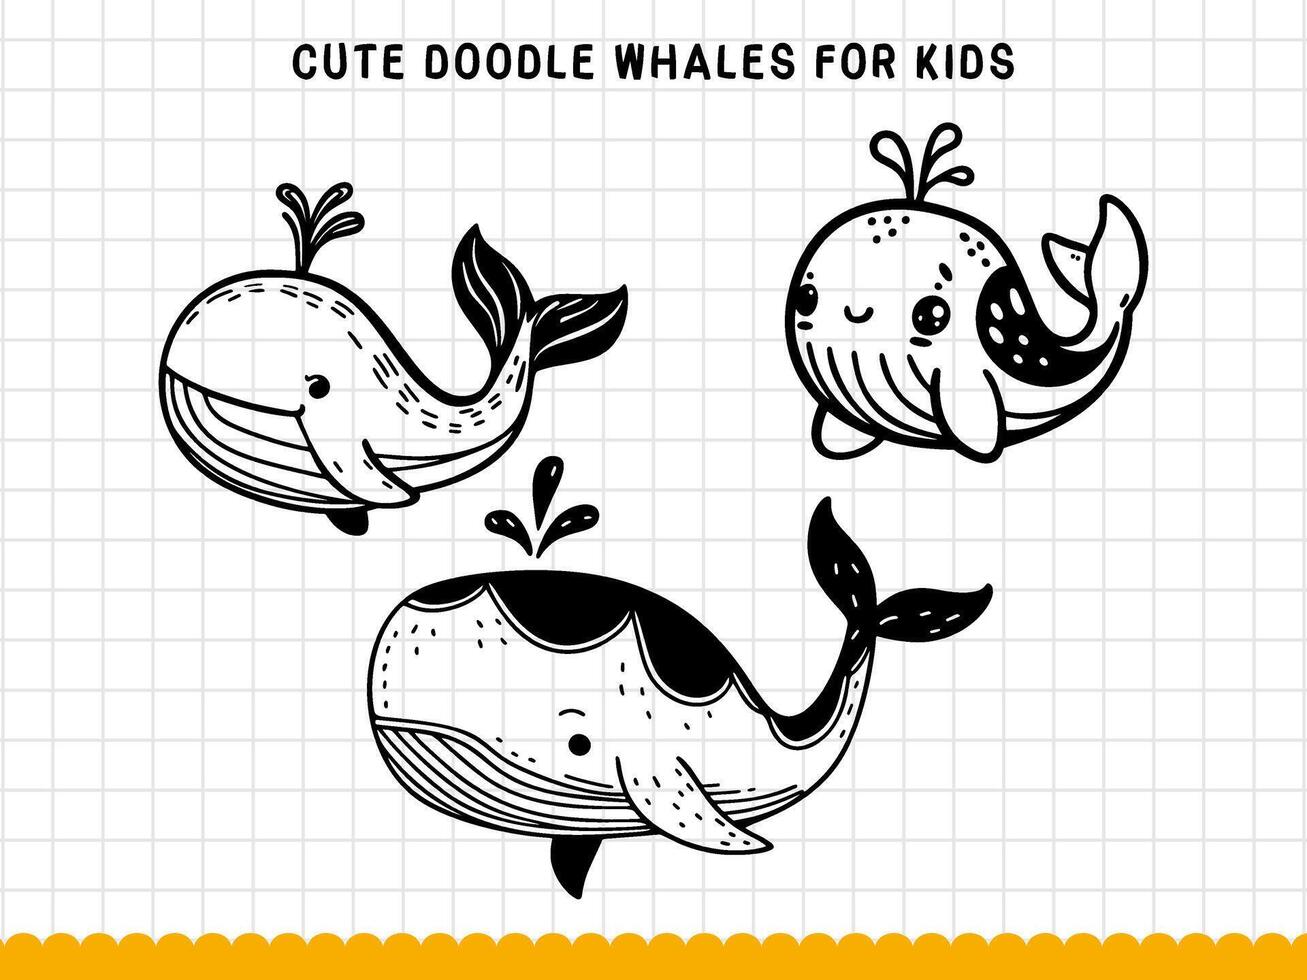 Cute doodle whales for kids. Vector illustartion.